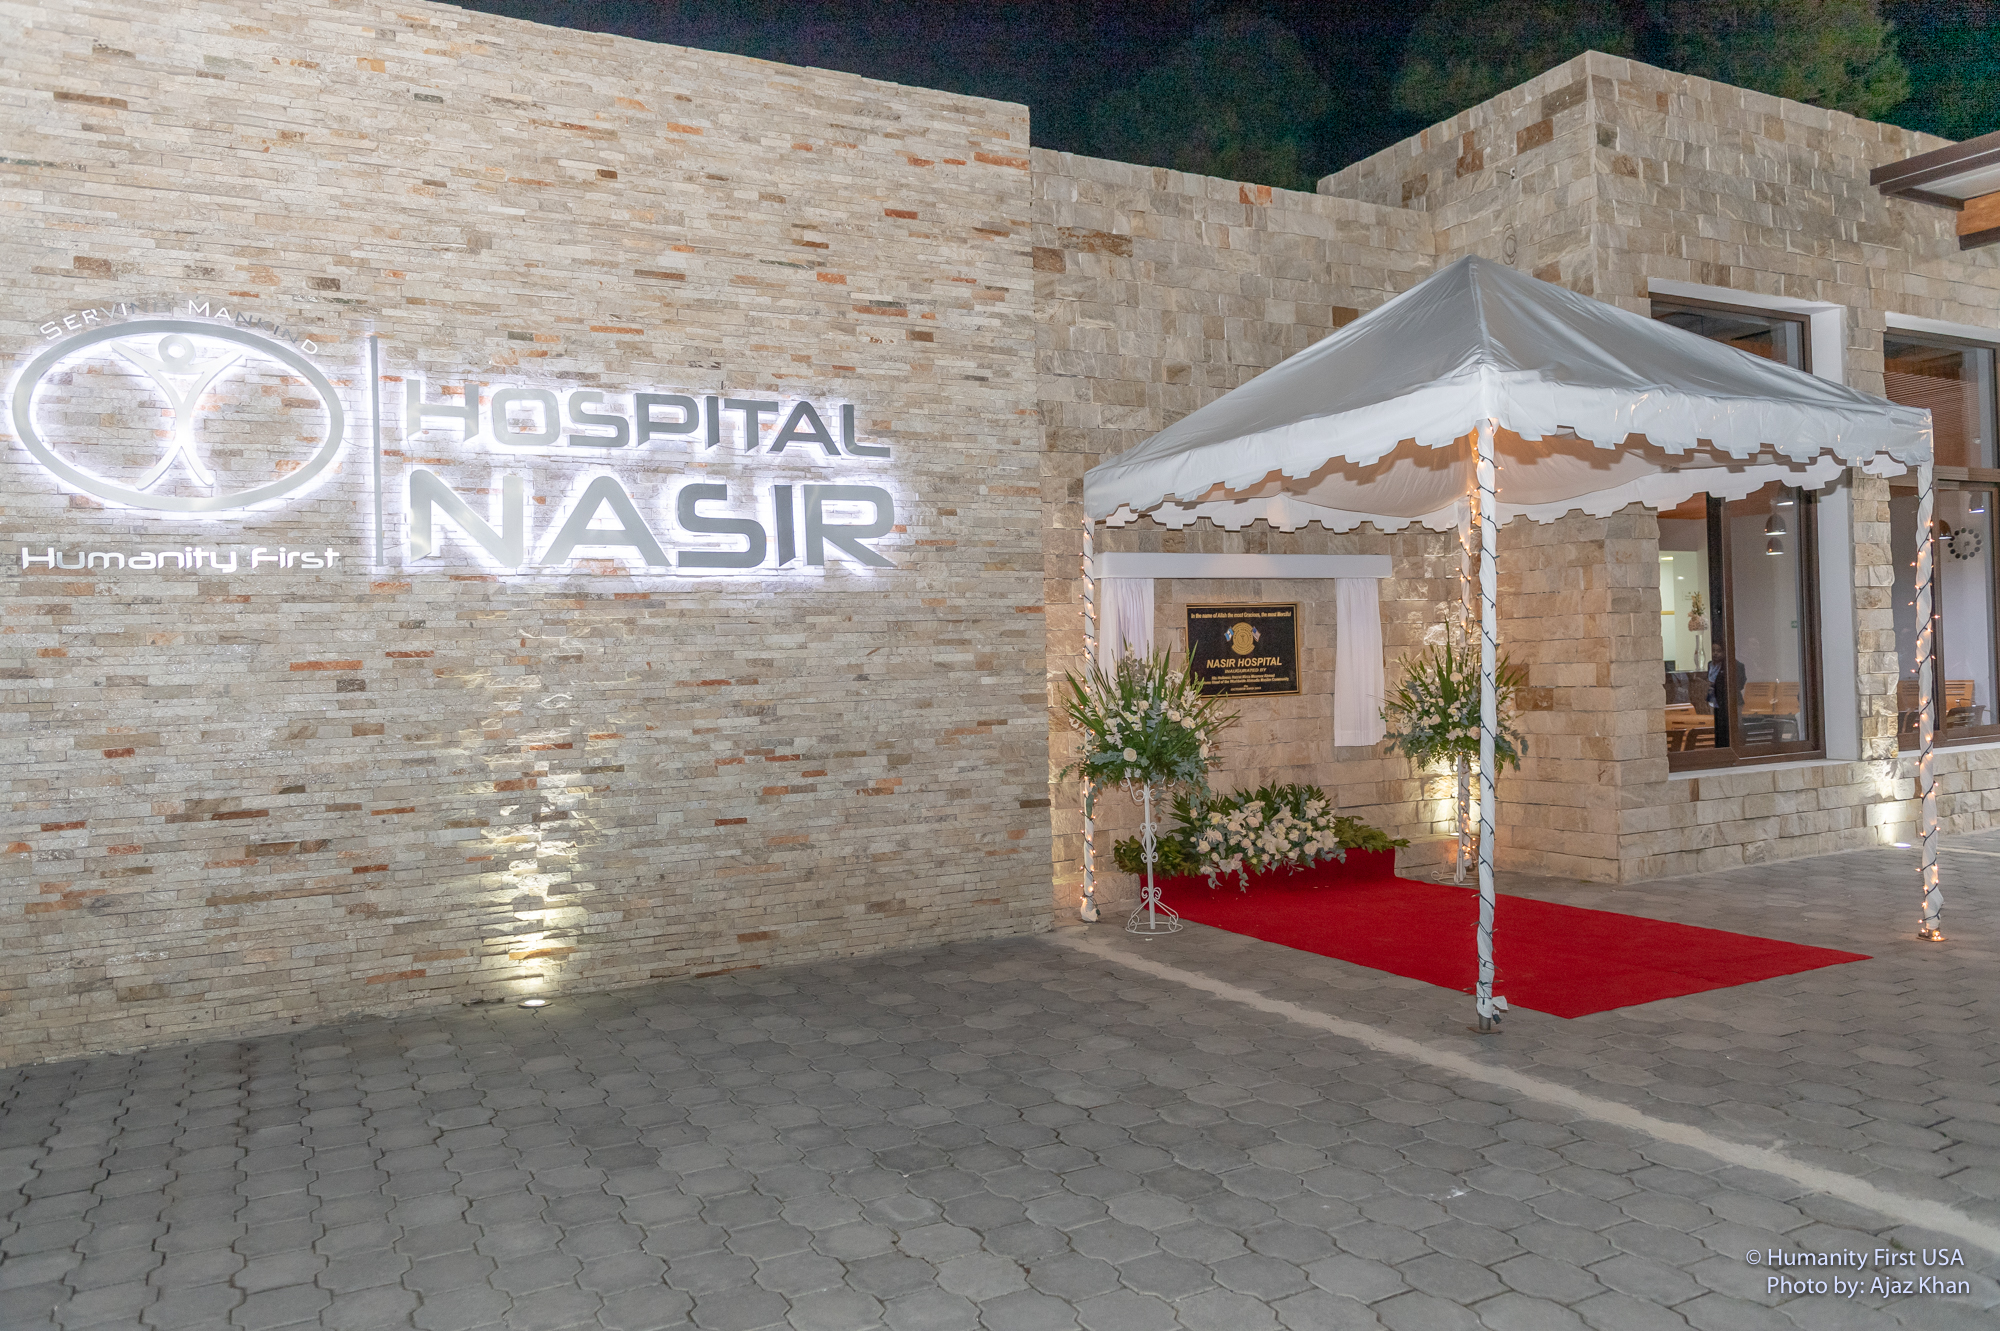 Nasir Hospital 2018 Inauguration